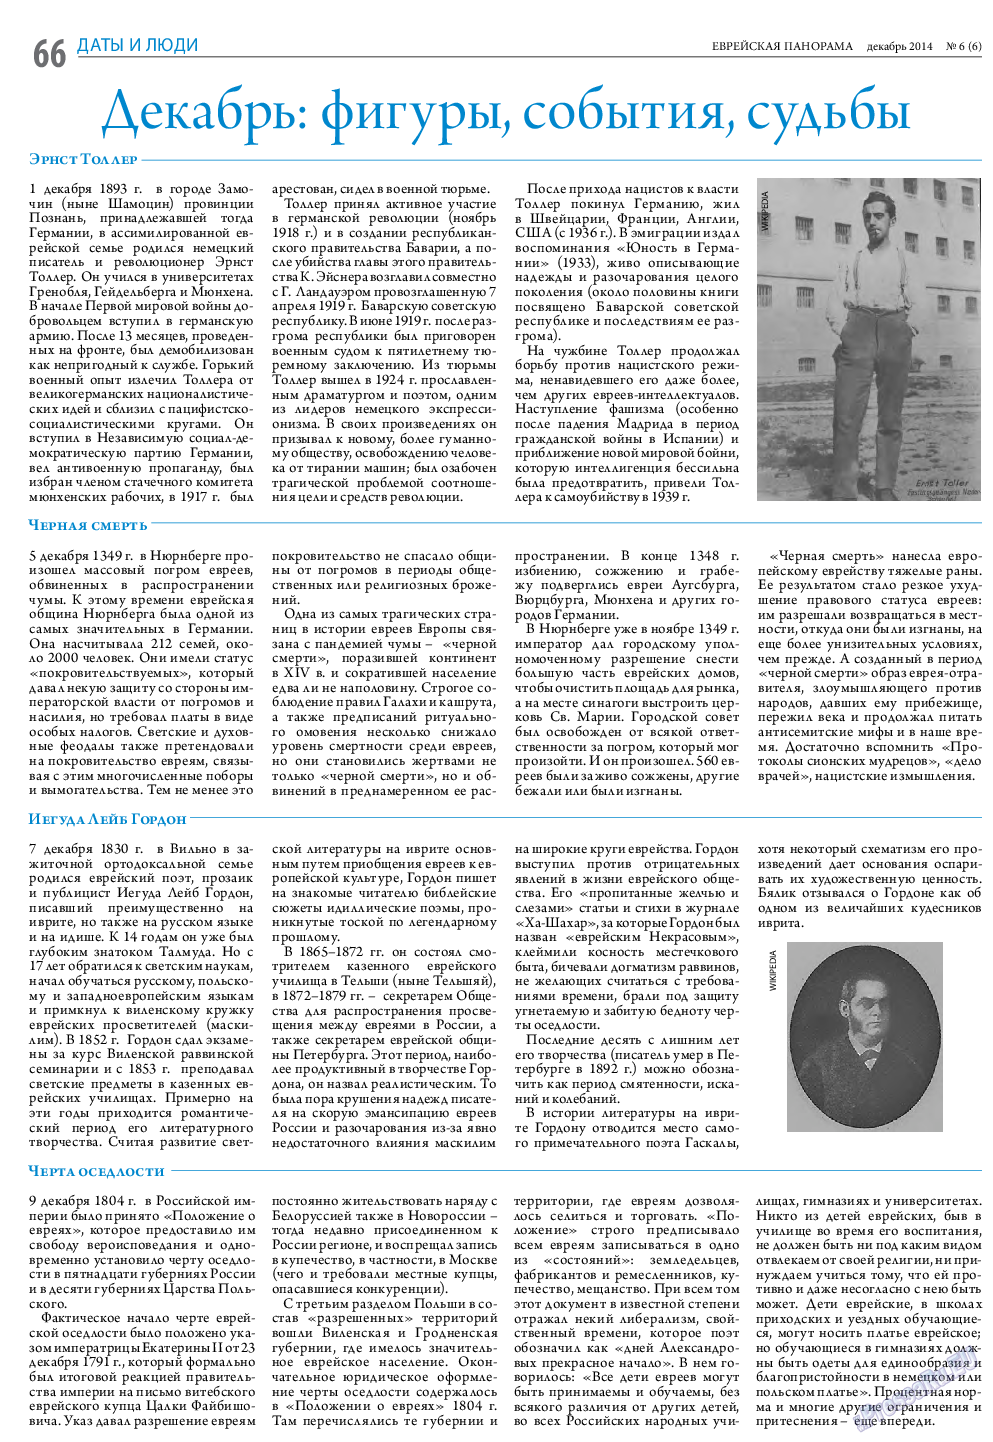 Еврейская панорама, газета. 2014 №6 стр.66